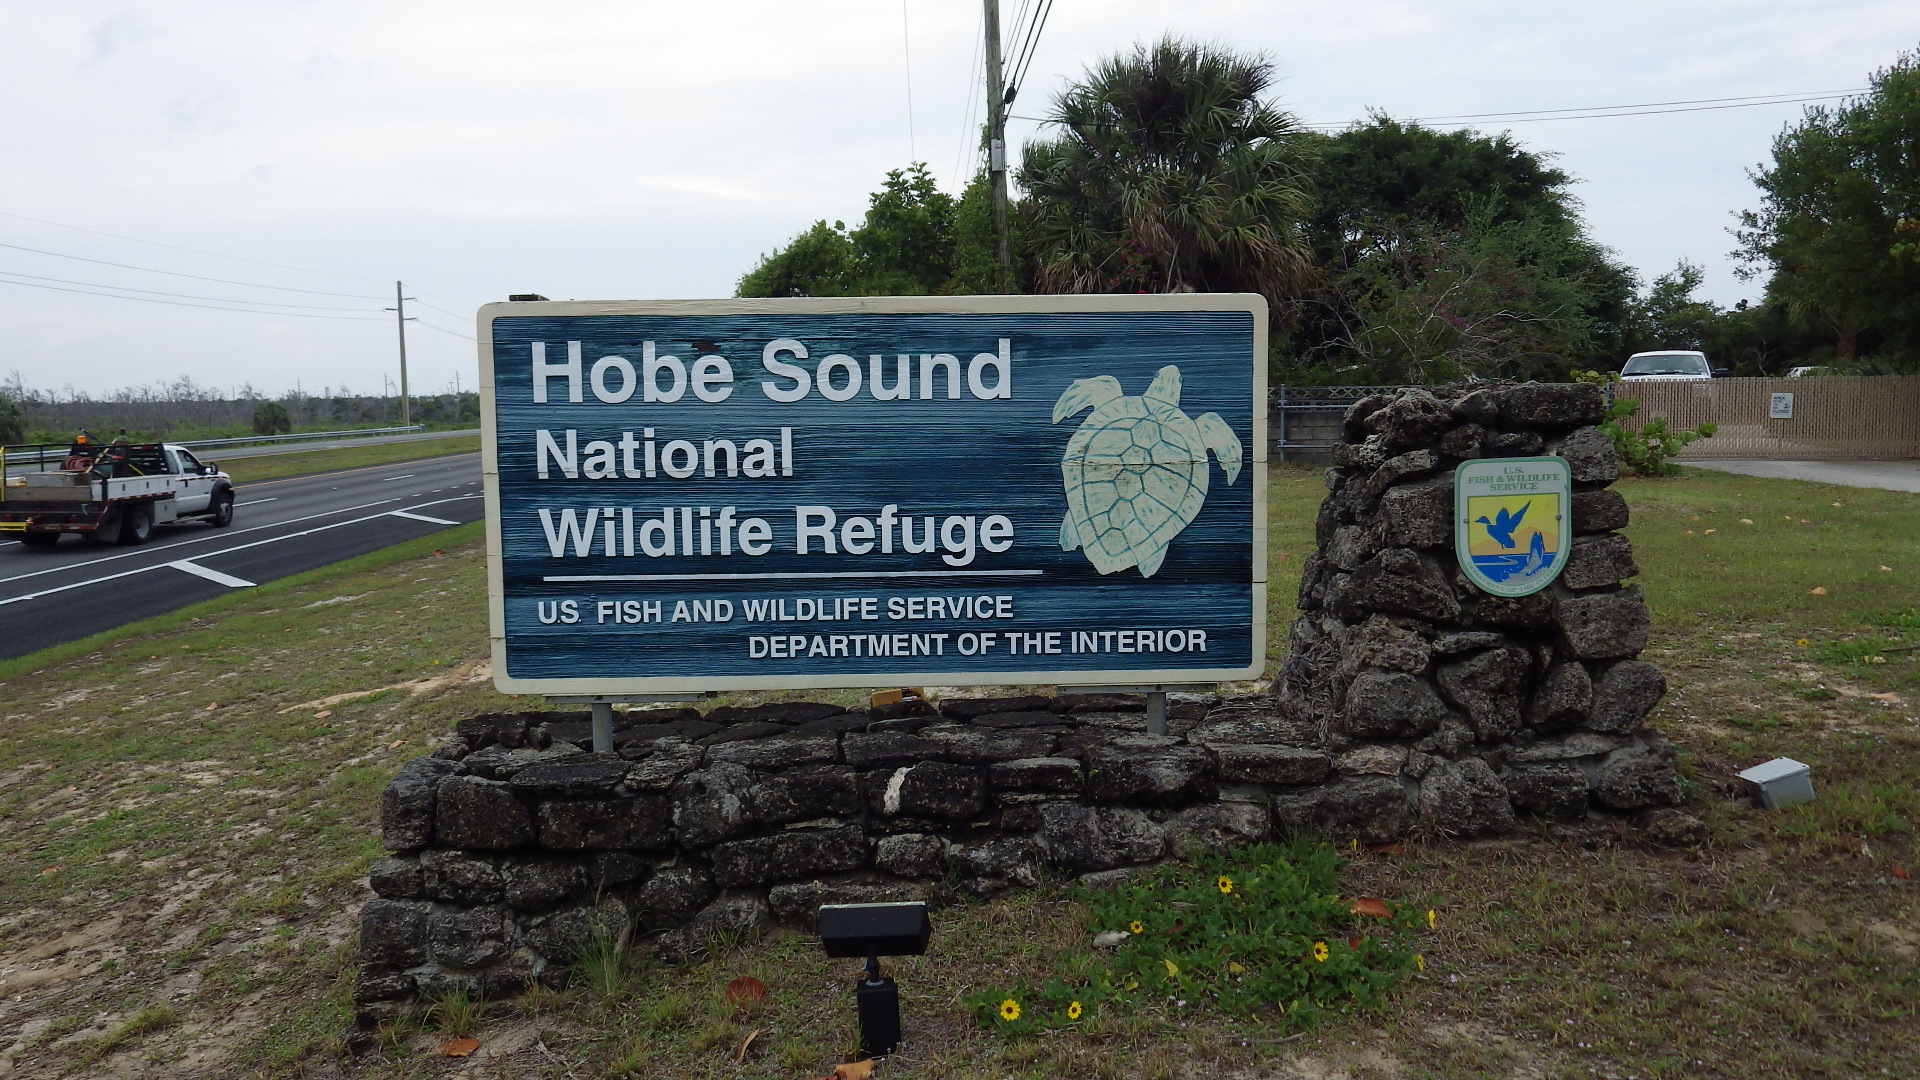 Hobe Sound Nature Center at the National Wildlife Reguge Image